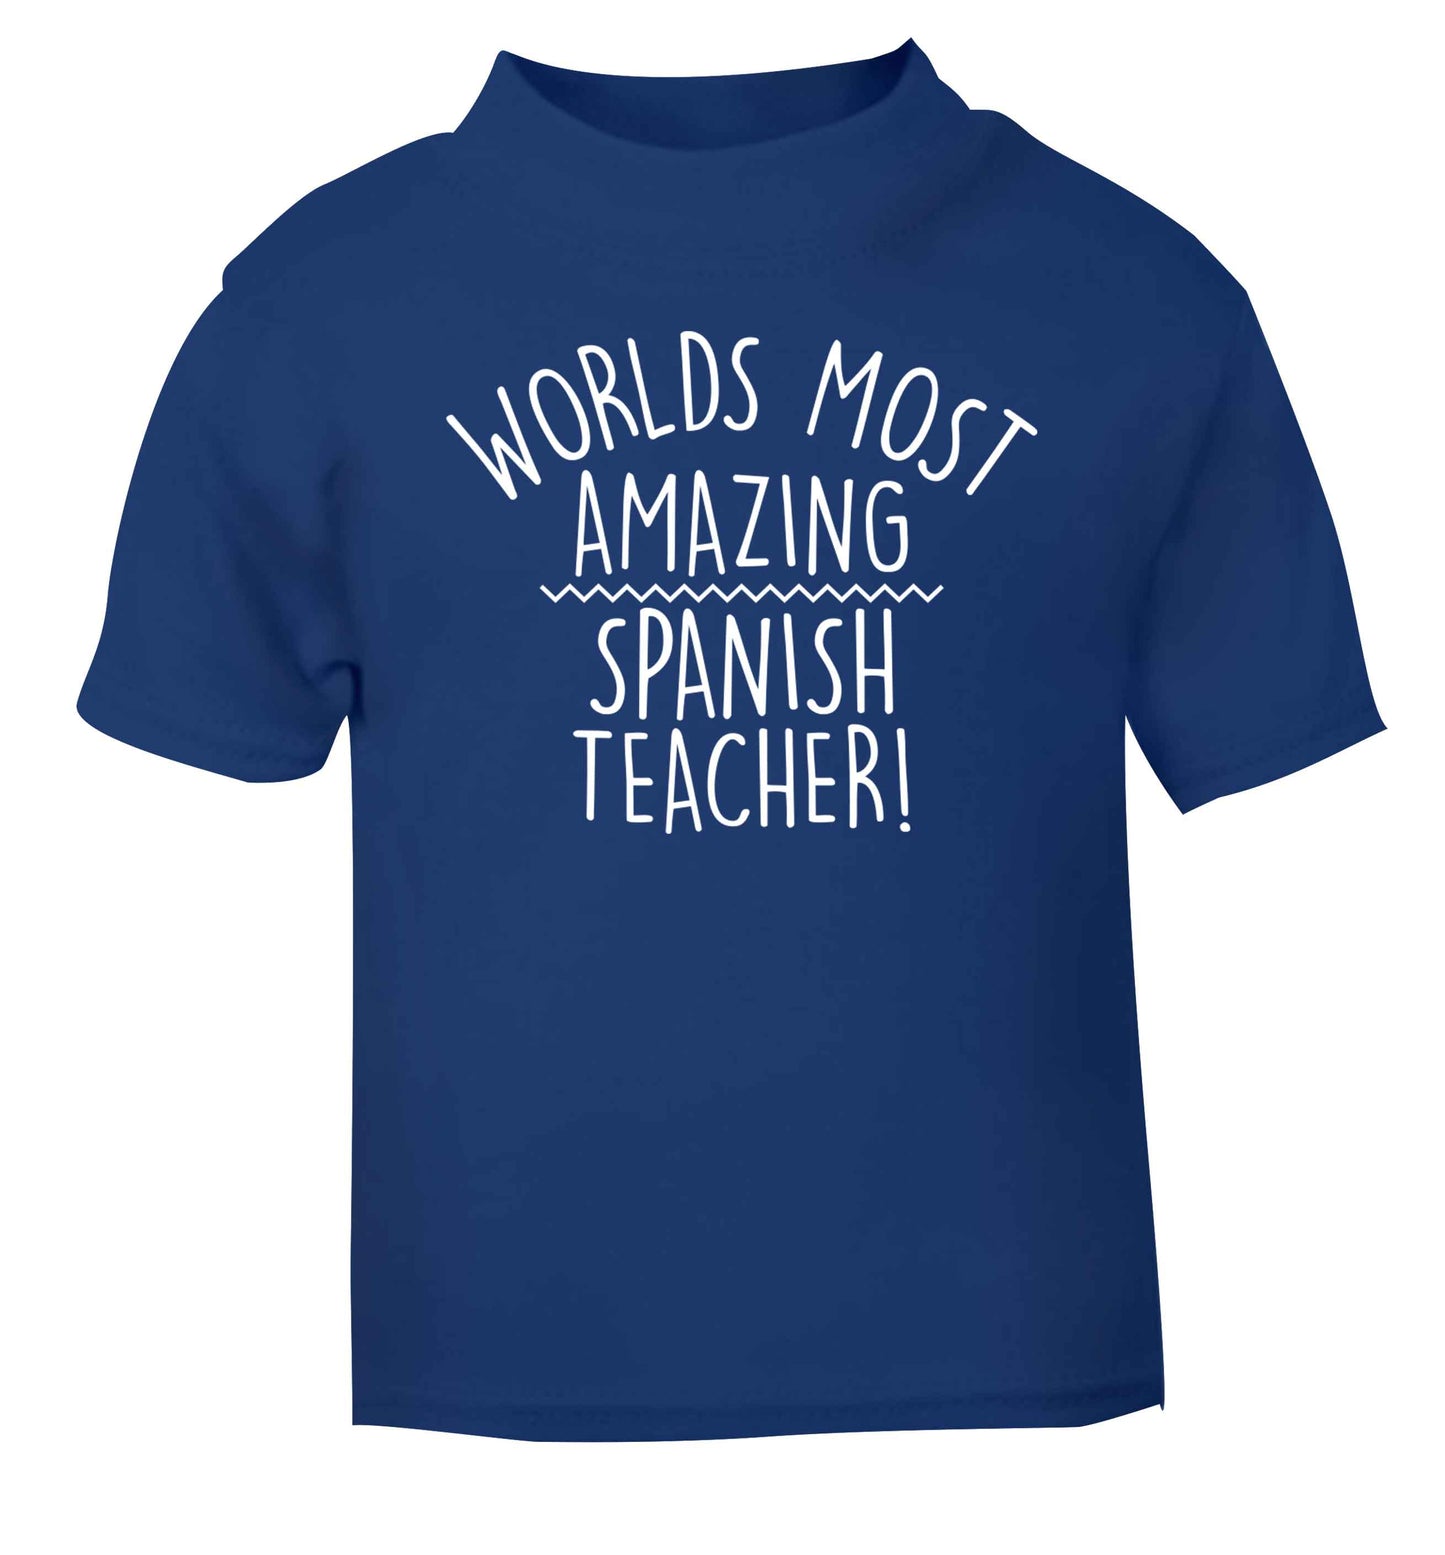 Worlds most amazing Spanish teacher blue baby toddler Tshirt 2 Years